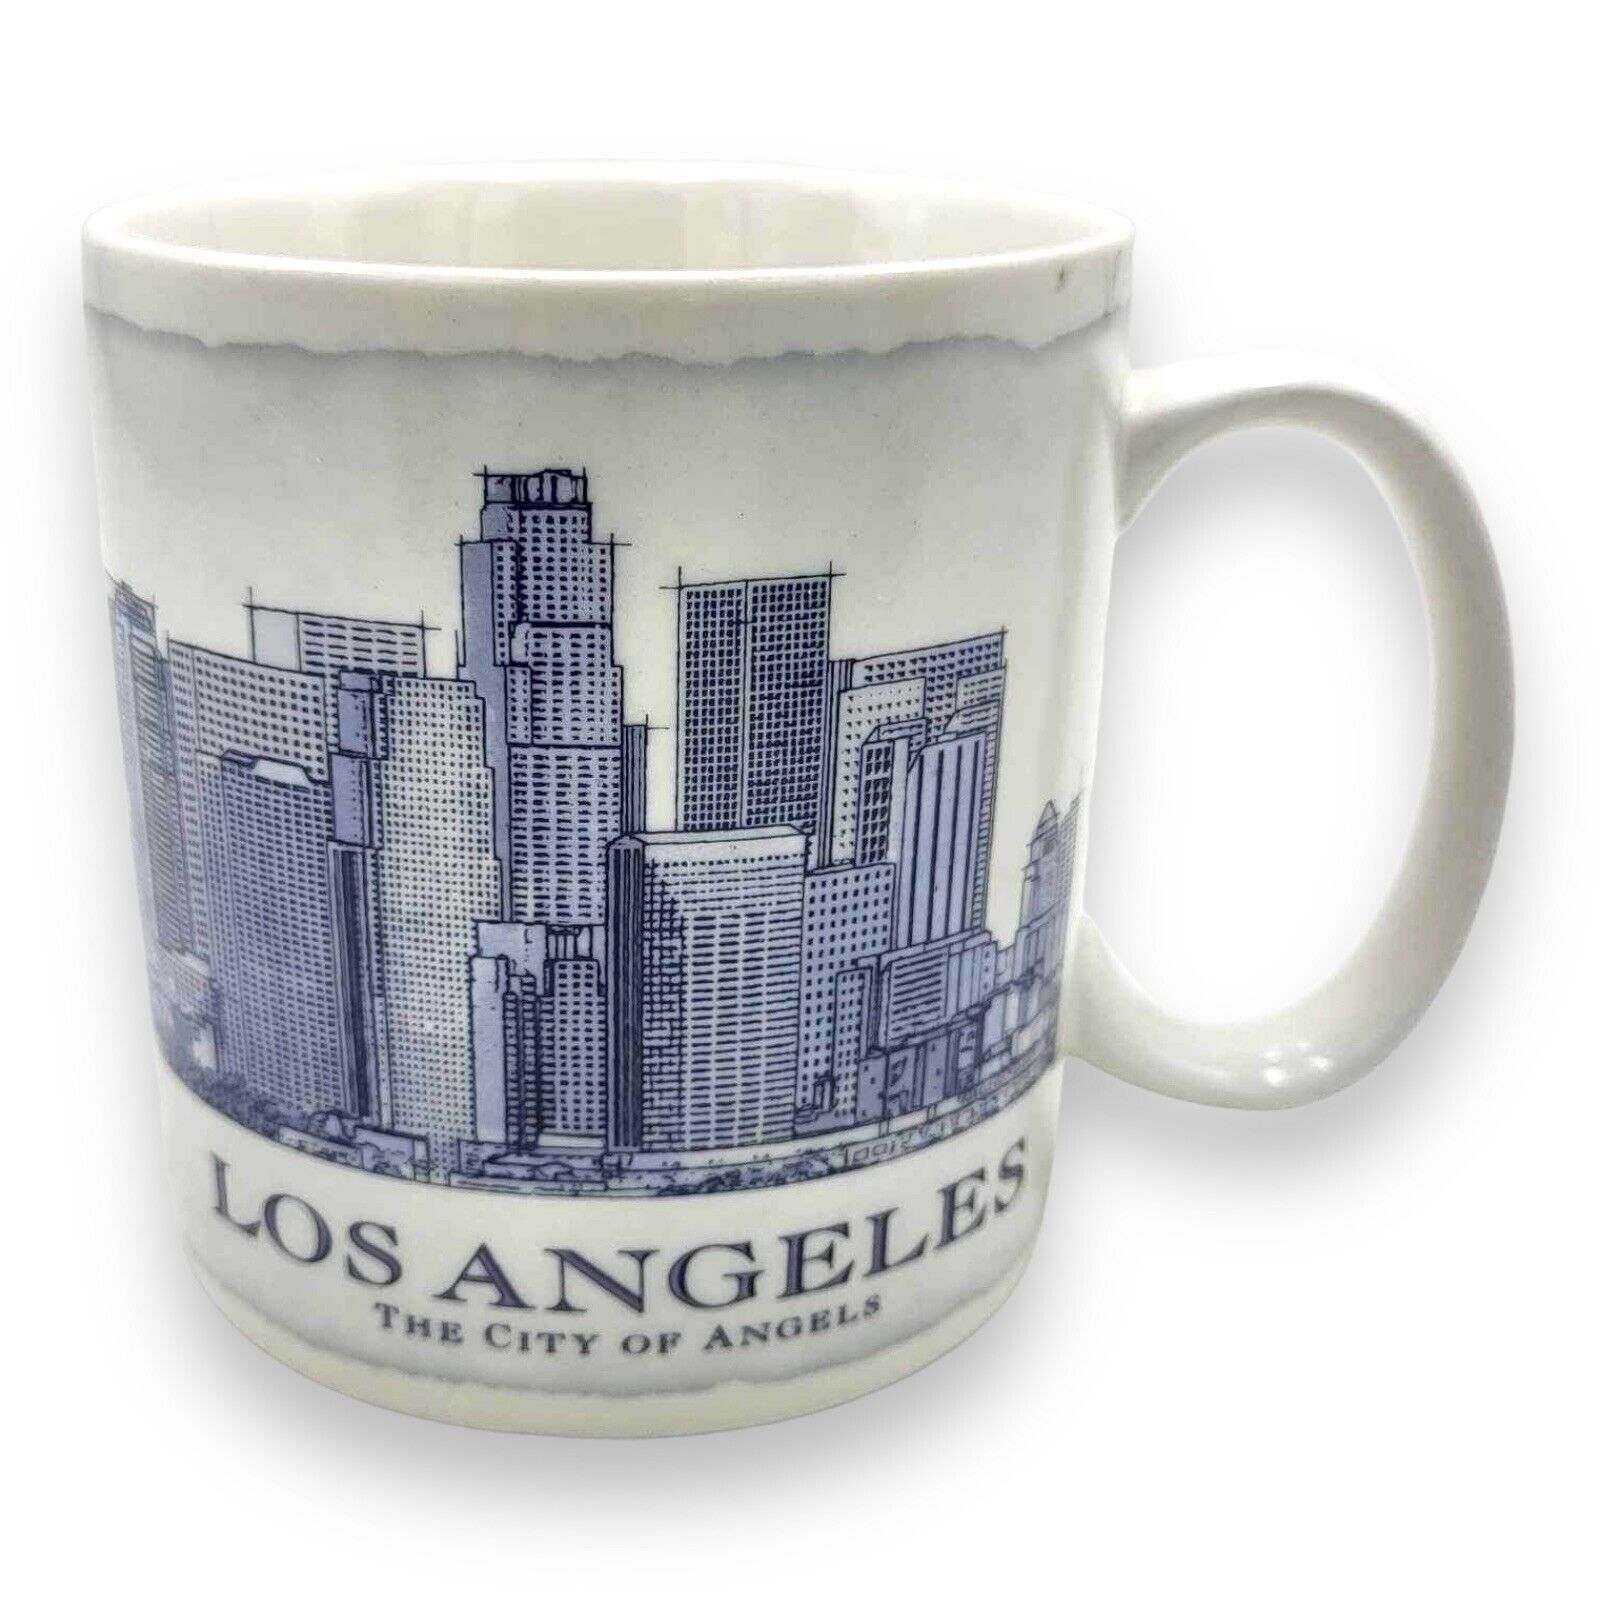 2006 Starbucks 18 oz Mug Los Angeles The City Of Angels Architectural Series